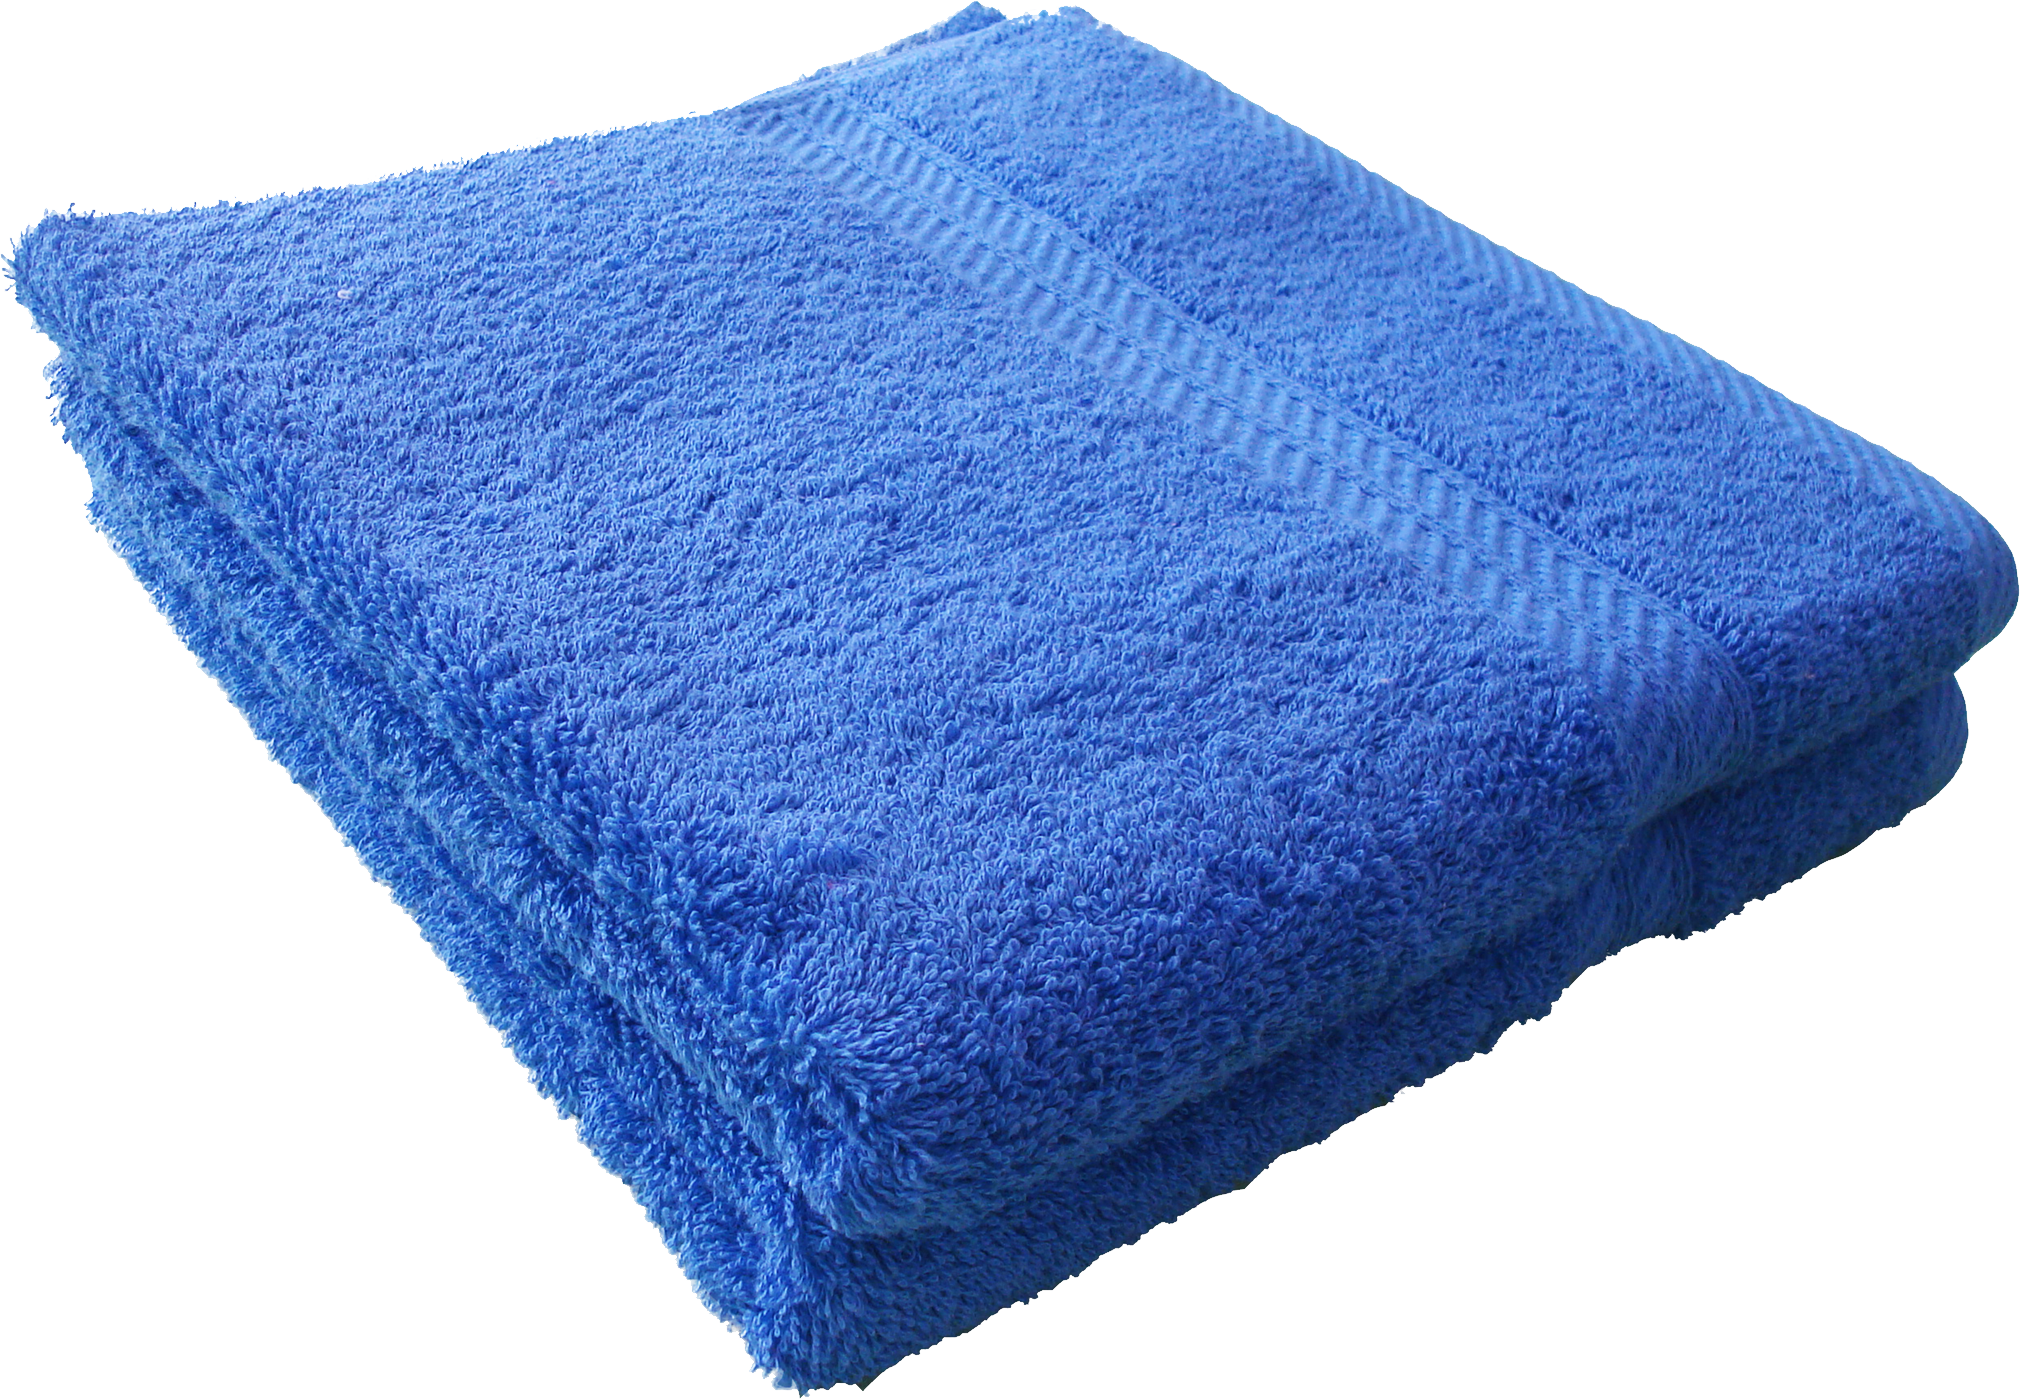 Прозрачные полотенца. Полотенце. Полотенце махровое. Синее одеяло. Синее полотенце.